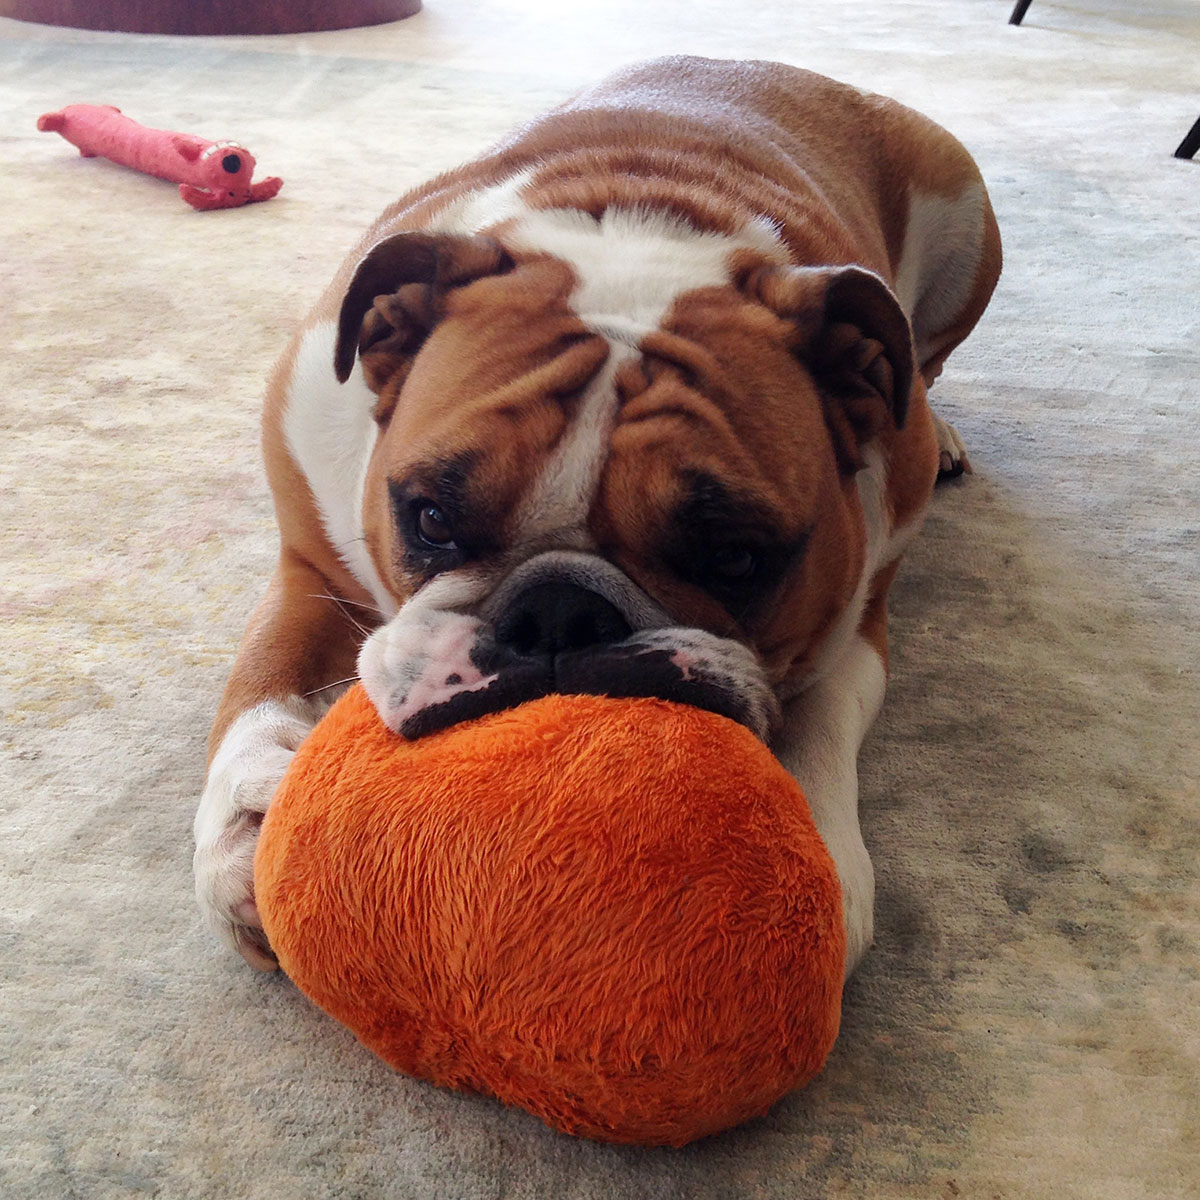 English Bulldog playing with a stuffed pumpkin